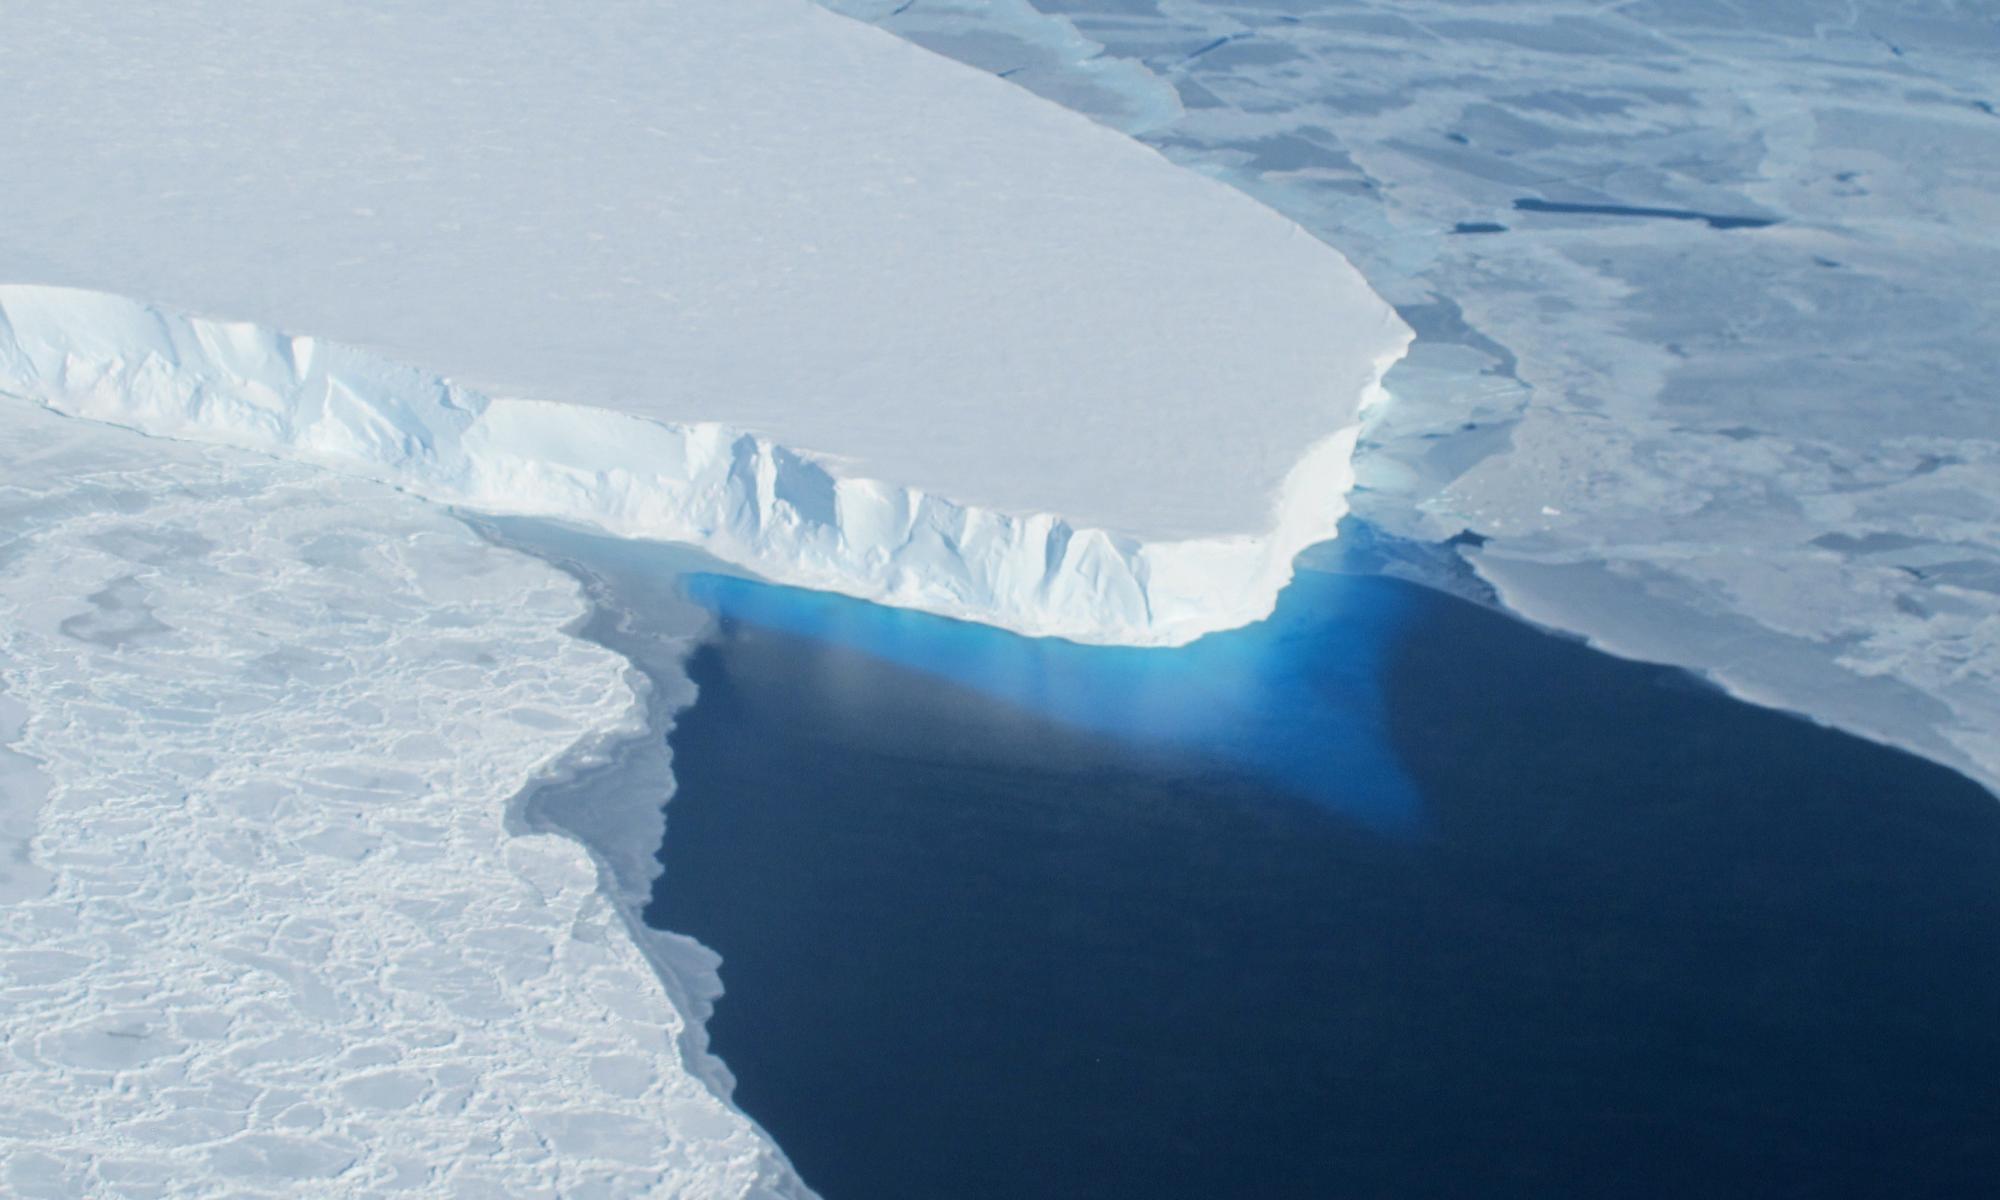 Huge cavities threaten glacier larger than Great Britain